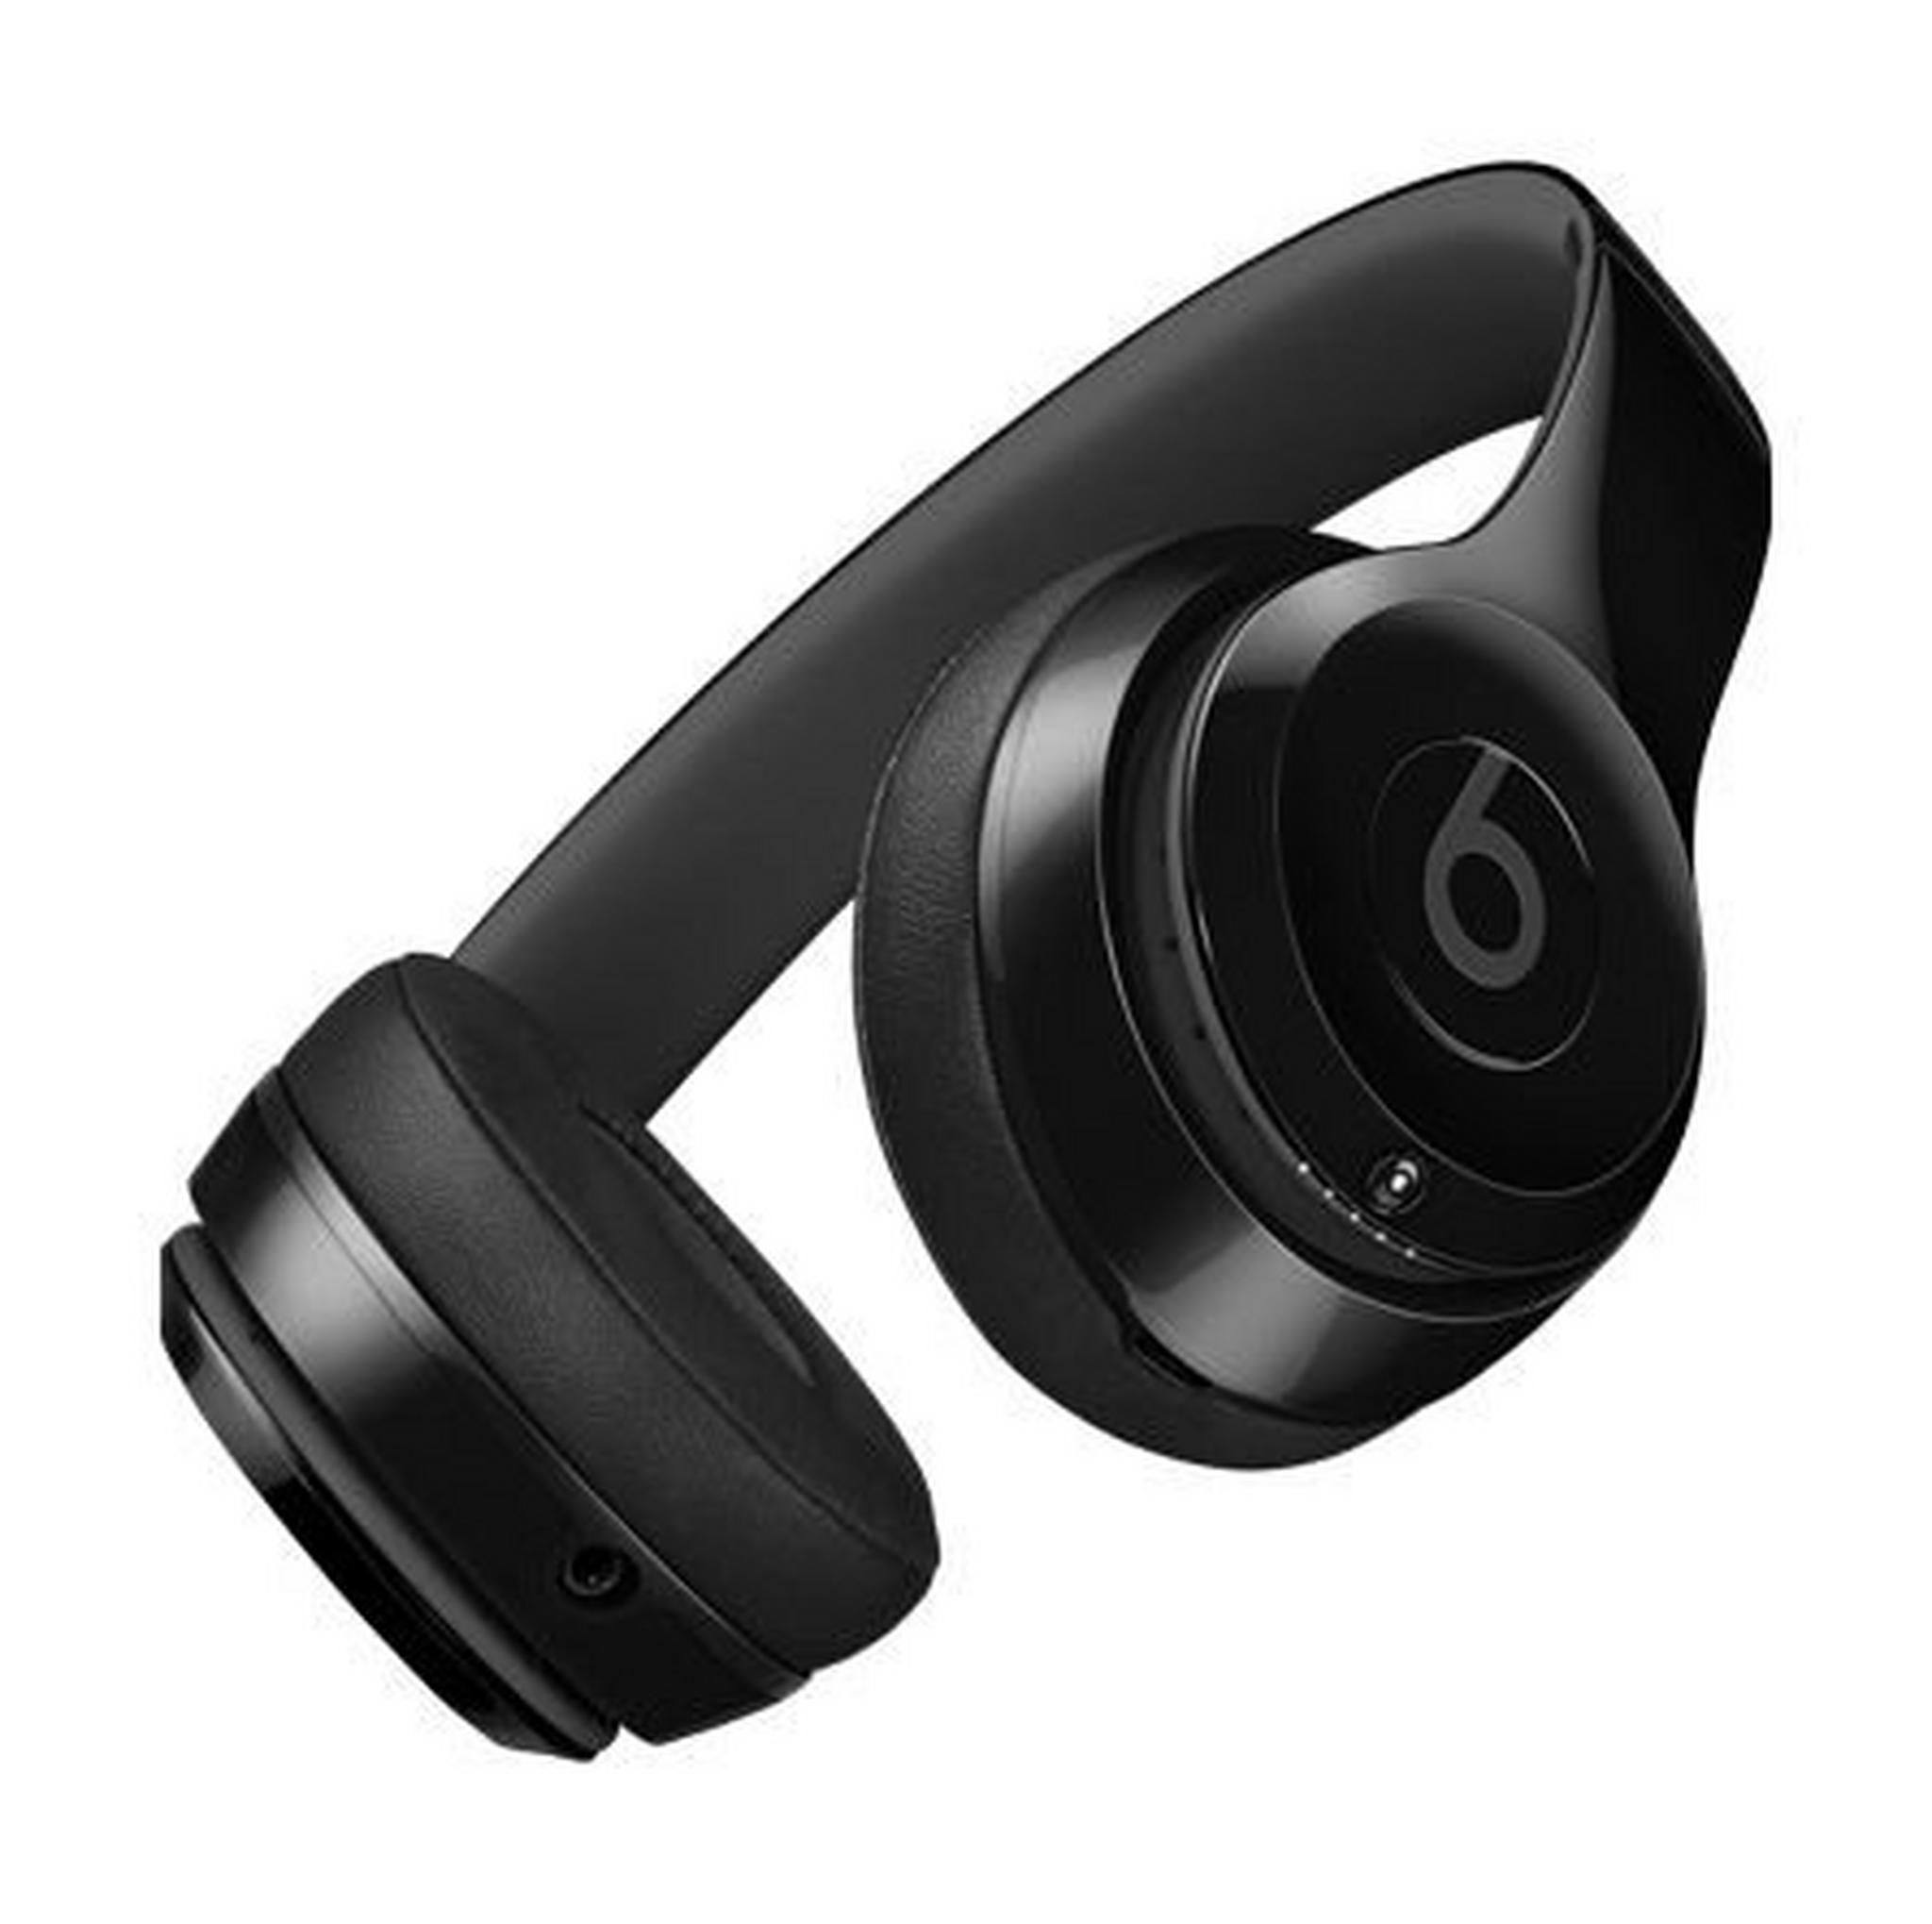 Beats Solo 3 Wireless headphone (MNEN2LL/A) - Gloss Black